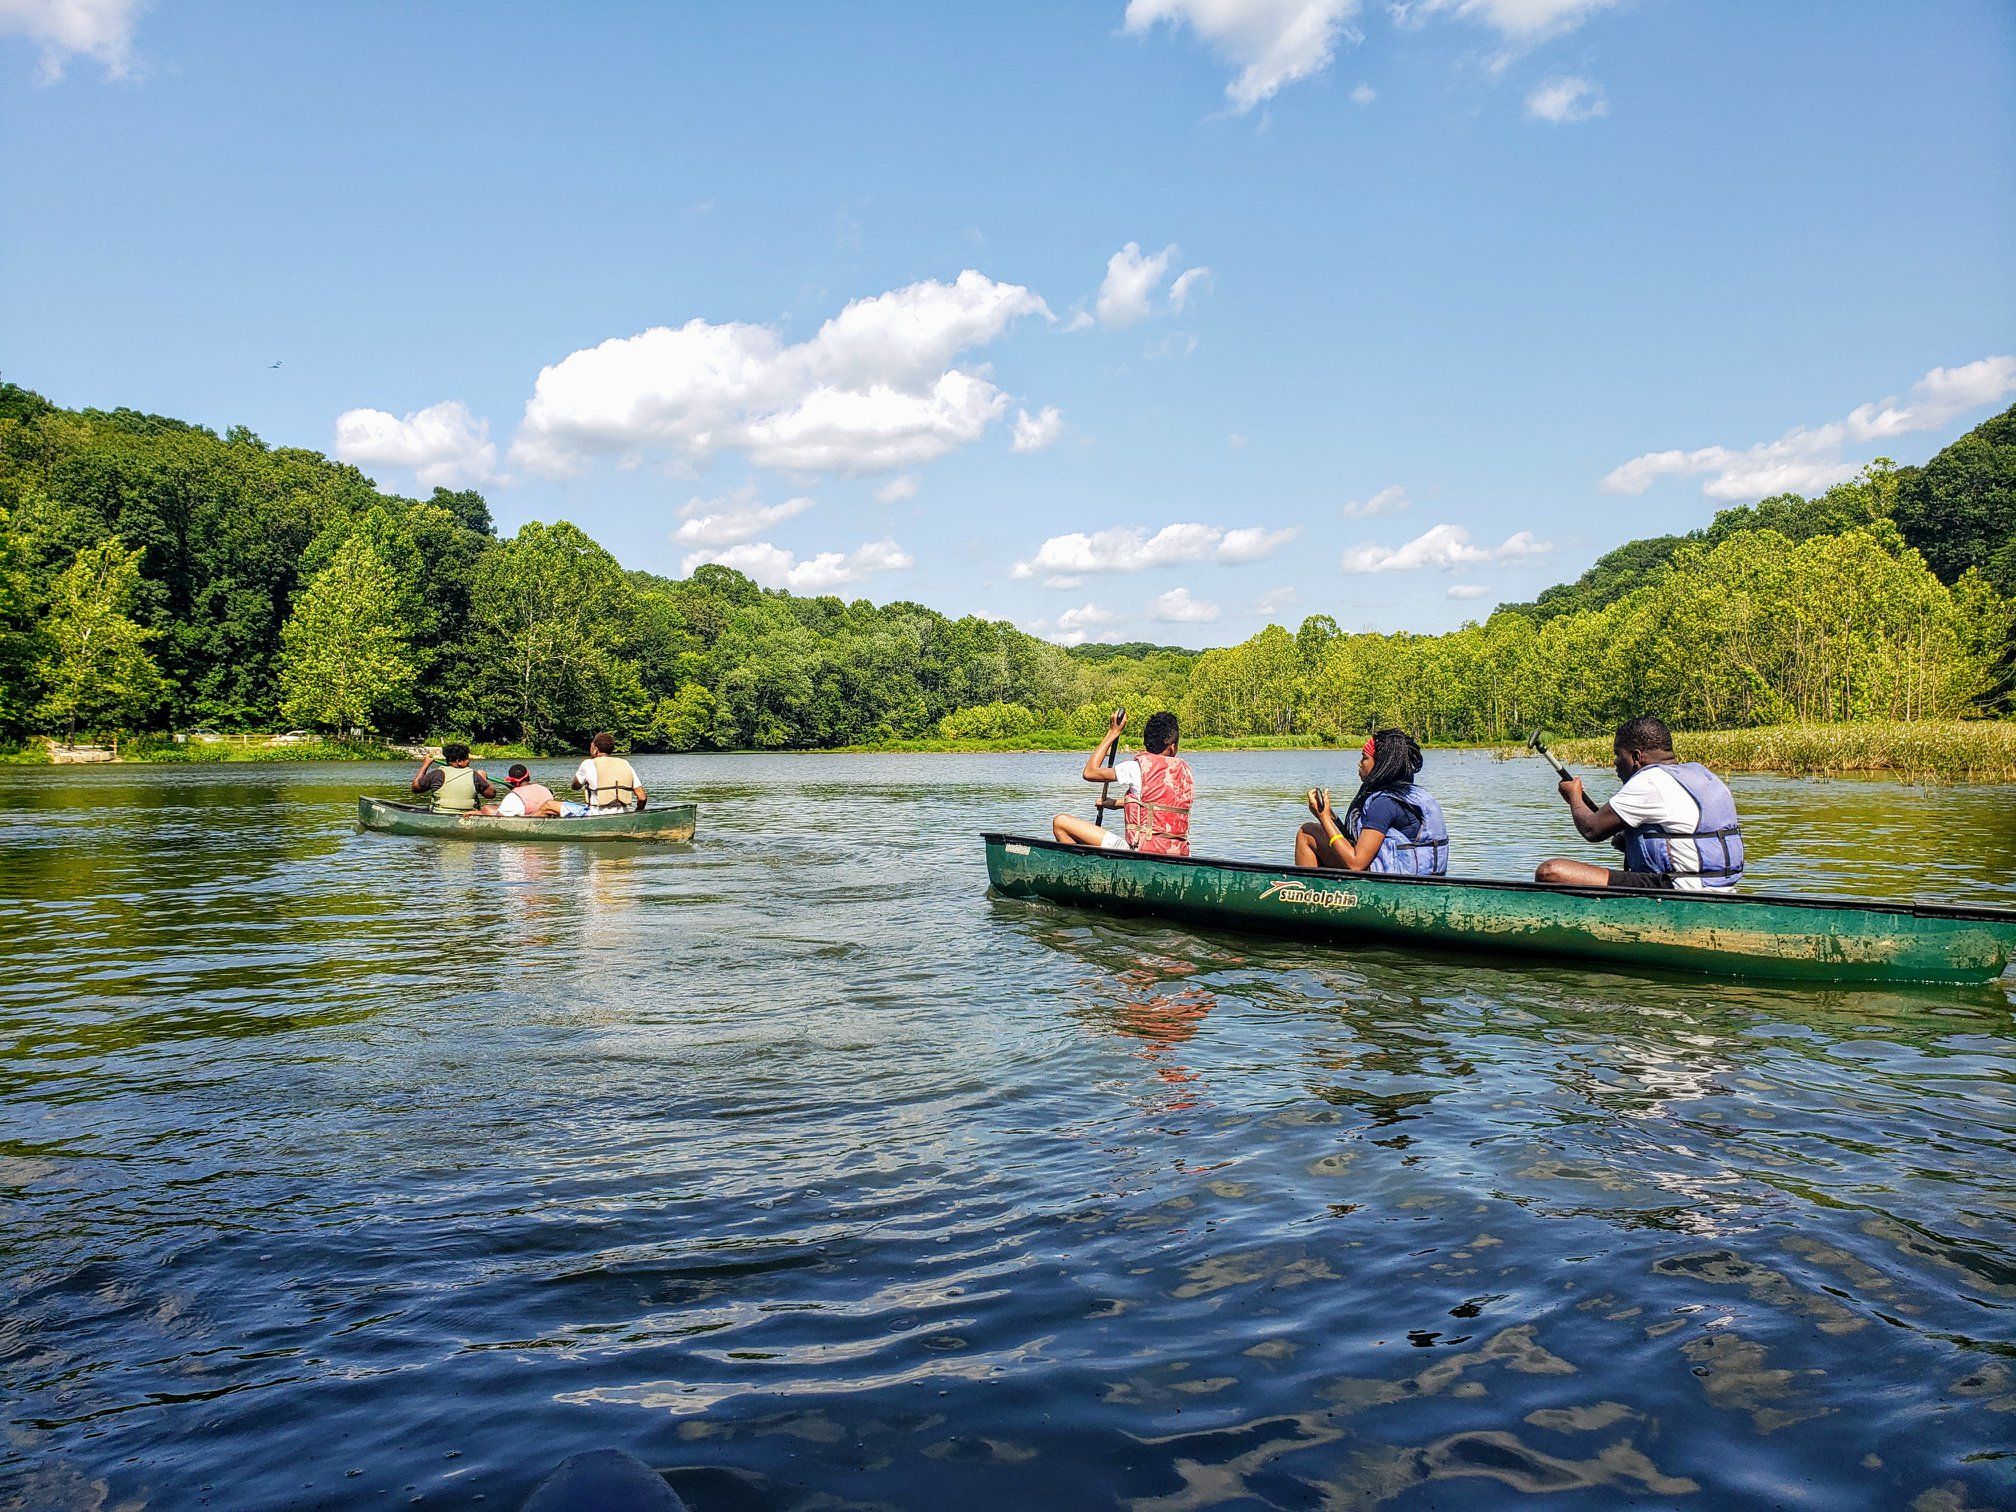 Park visitors enjoy a canoe paddle on Griffy Lake.